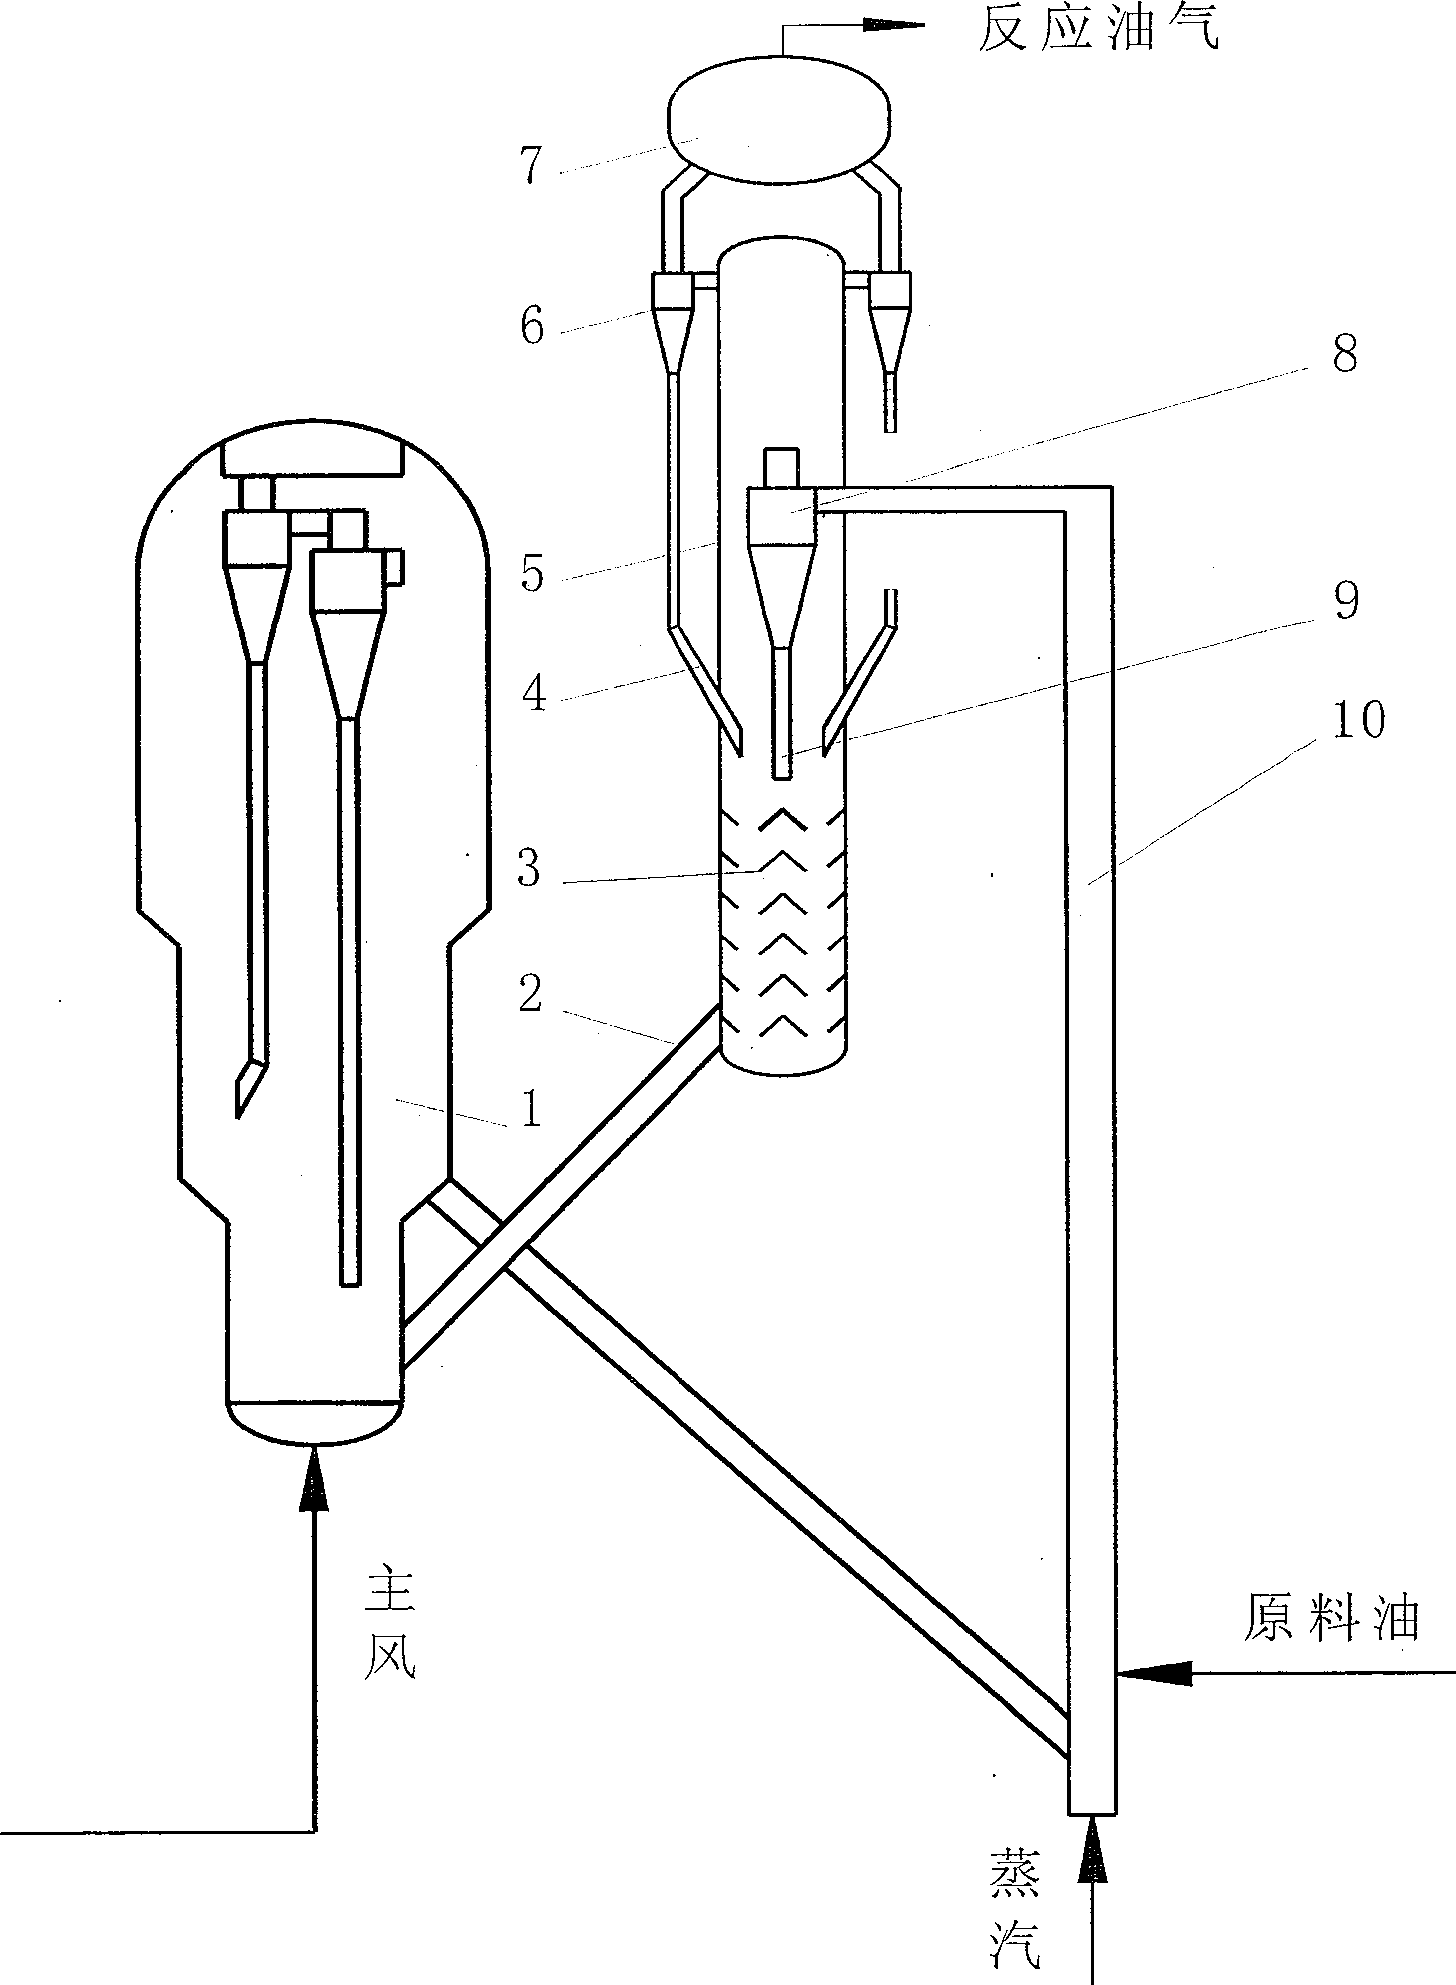 Catalytic cracker of coarse cyclone internal tubular settler